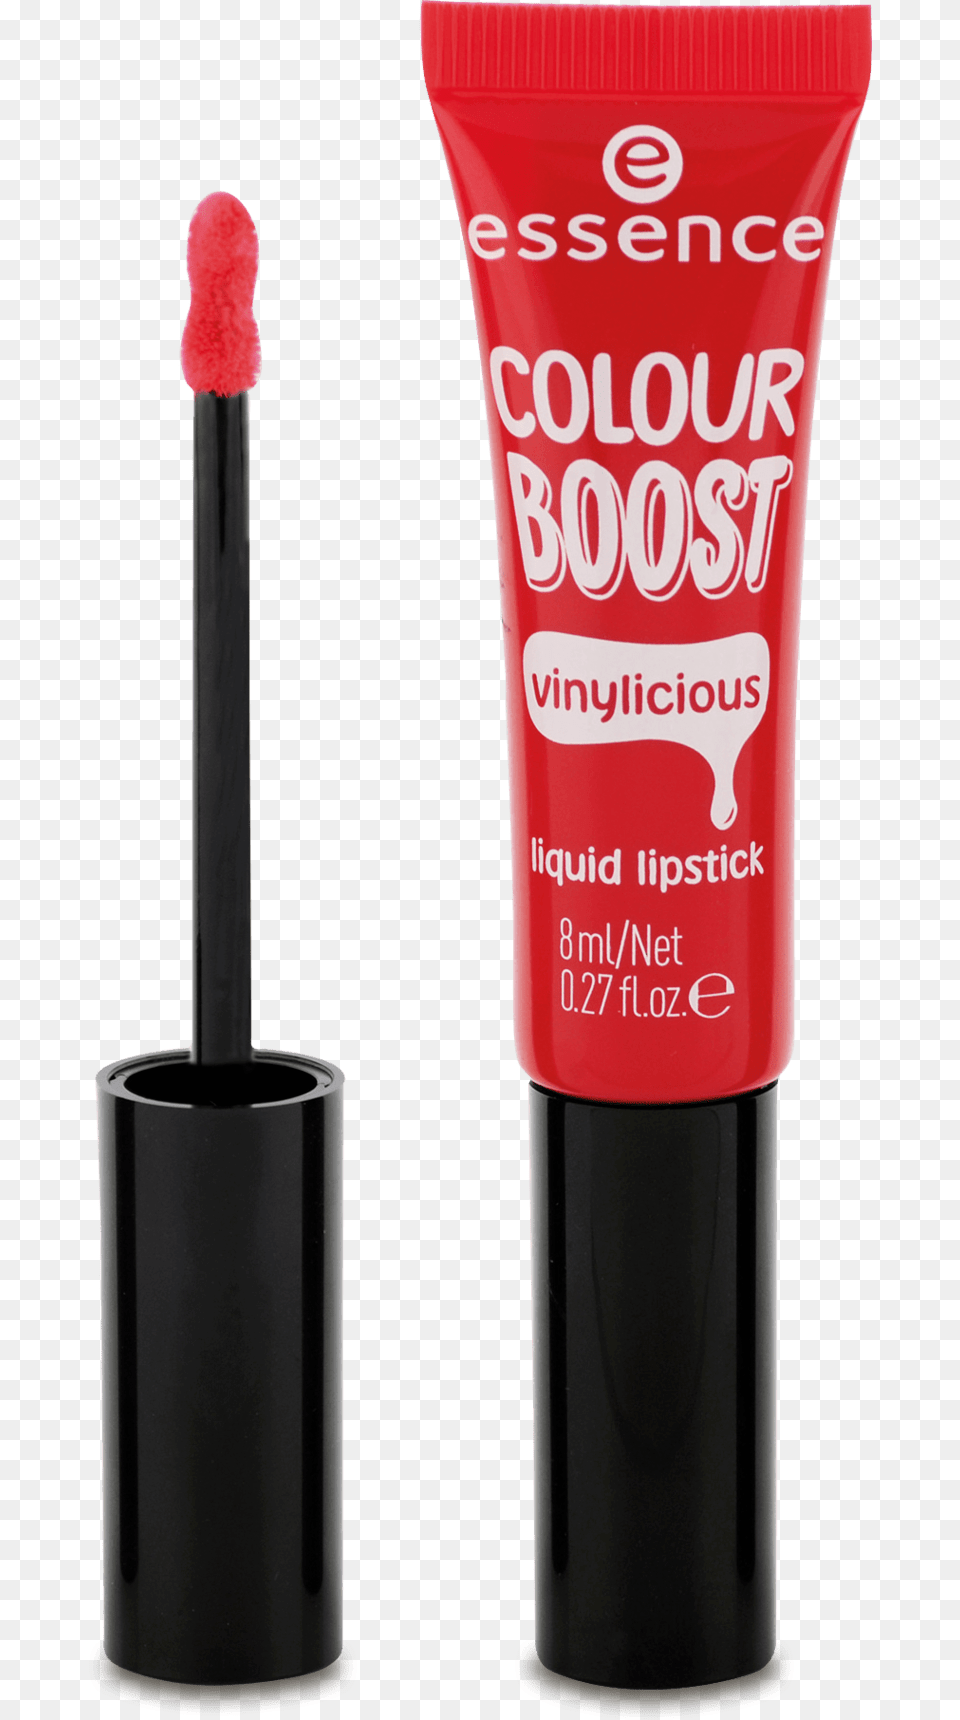 Essence Colour Boost Liquid Lipstick 3 Cosmetics, Dynamite, Weapon Png